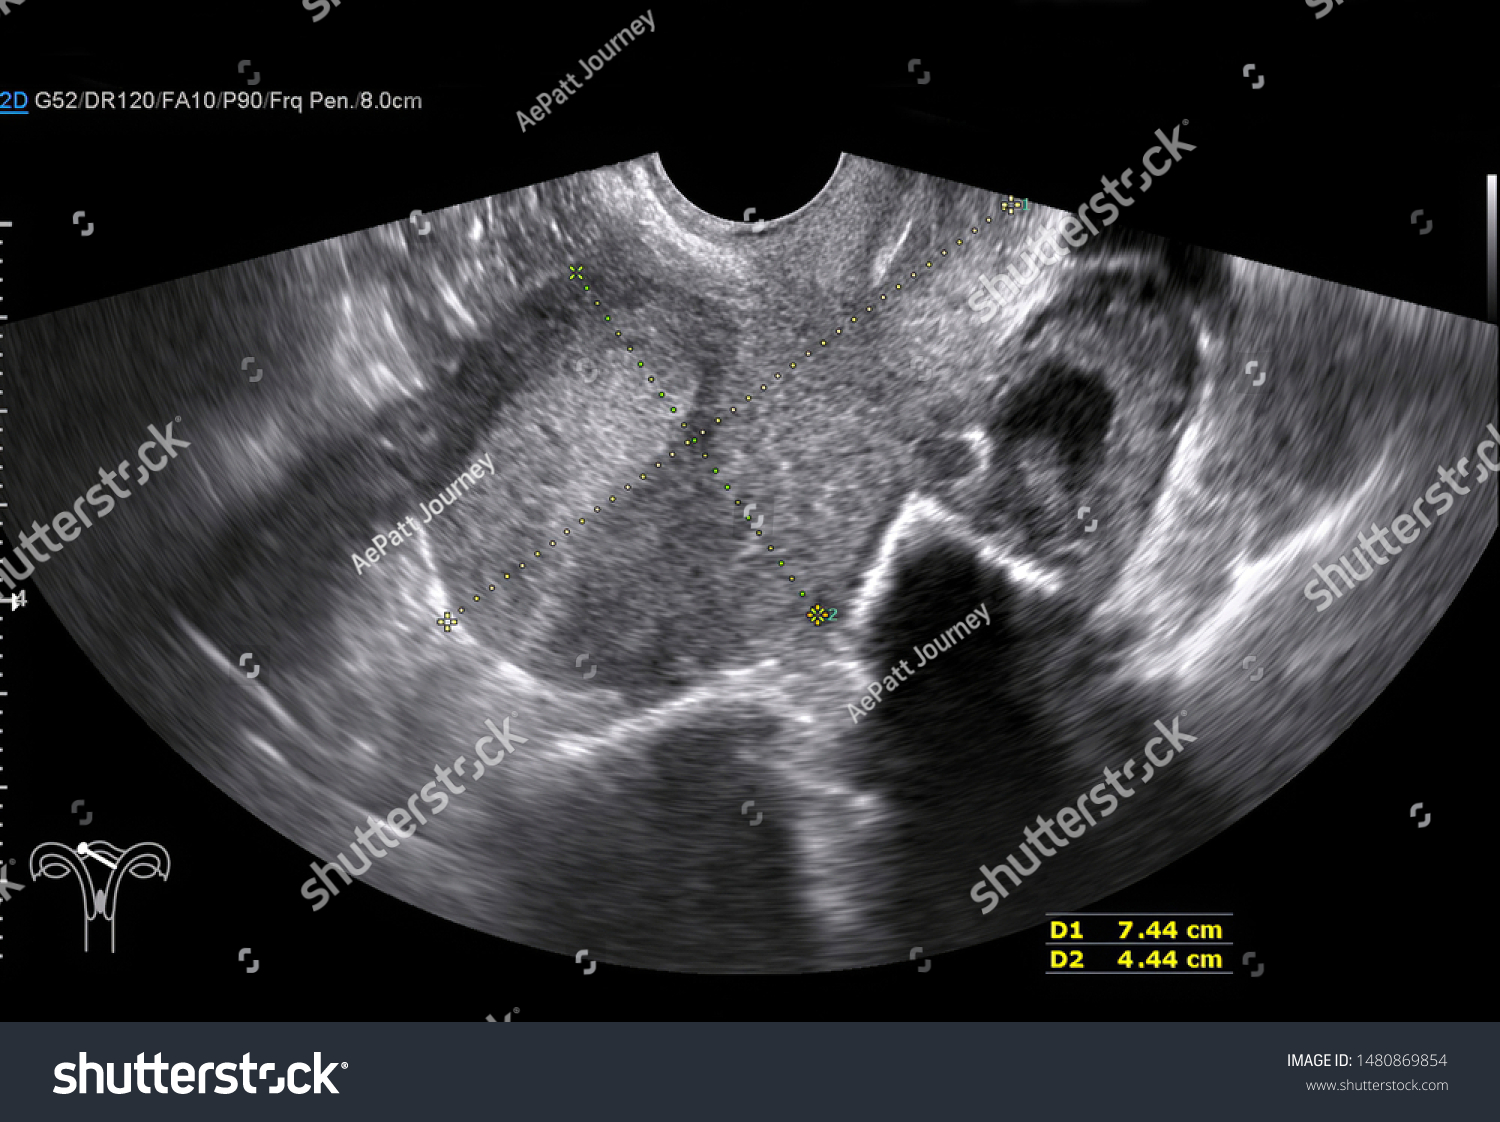 Transvaginal Semicircular Transverse Ultrasound Image Of My Xxx Hot Girl